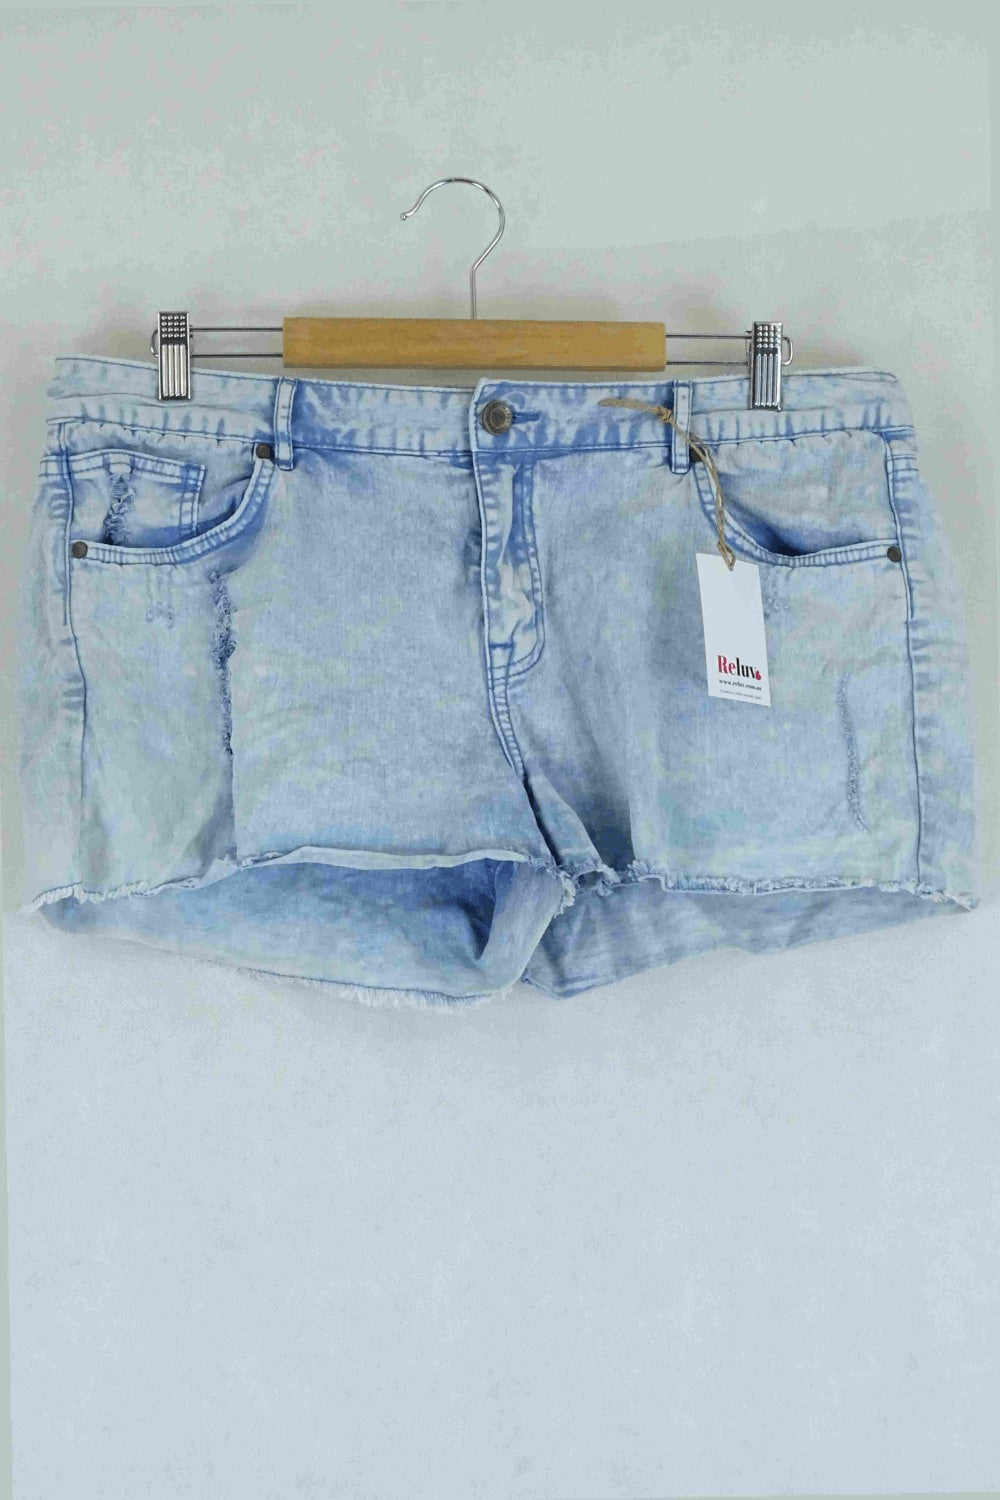 Just Jeans Blue Denim Shorts 14